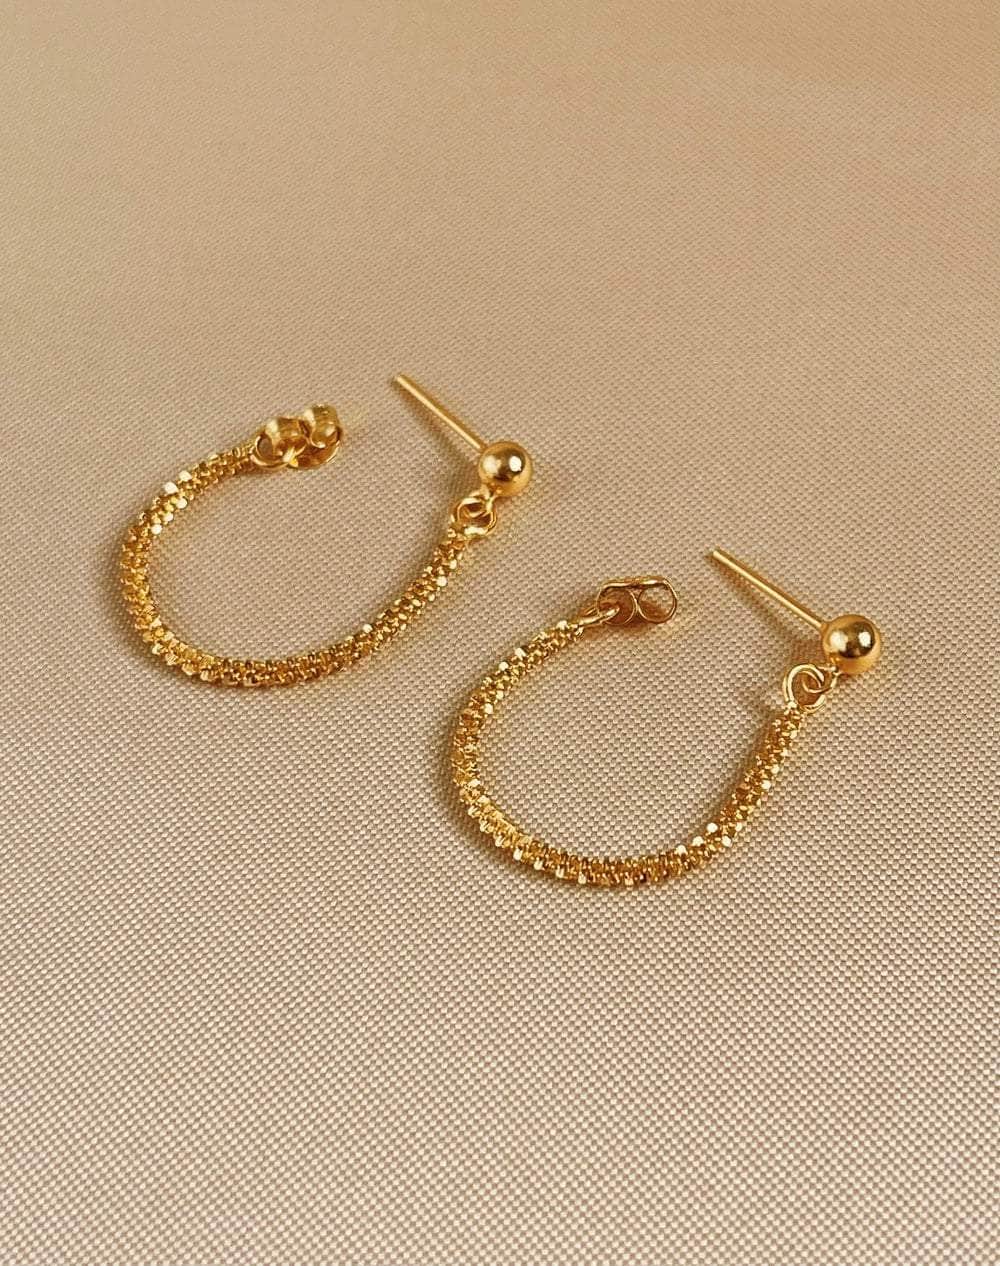 So Dainty Co. Chain / Dangle Earrings Cora Gold Earrings Gold Plated 925 Sterling Silver Jewelry